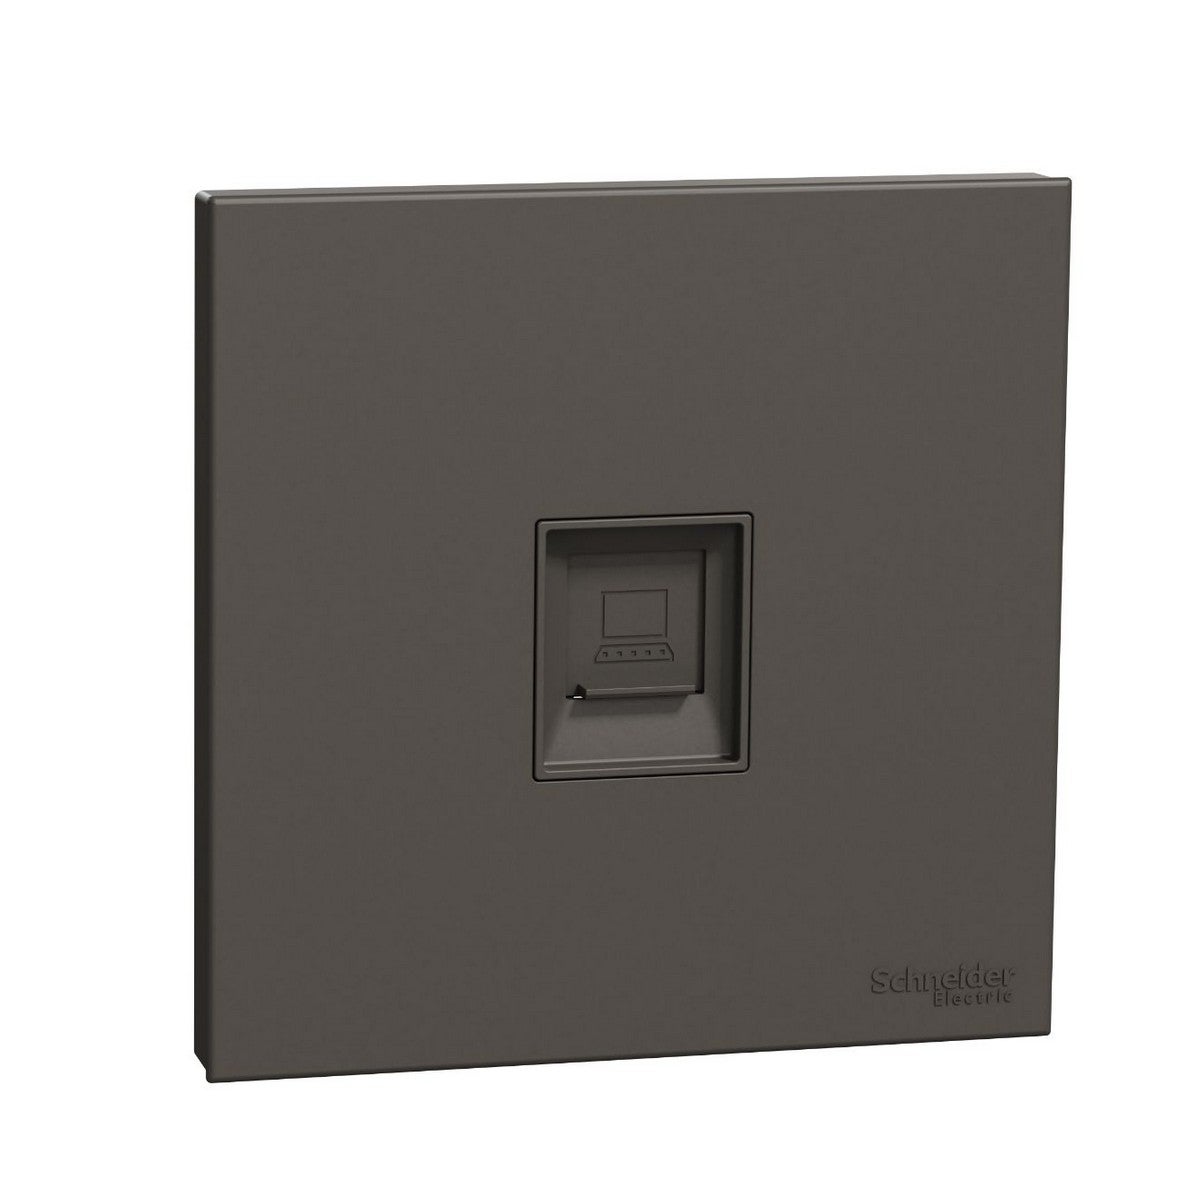 AvatarOn C, Data socket, RJ45, Cat 6, 1 gang, keystone on shuttered wall plate, dark grey